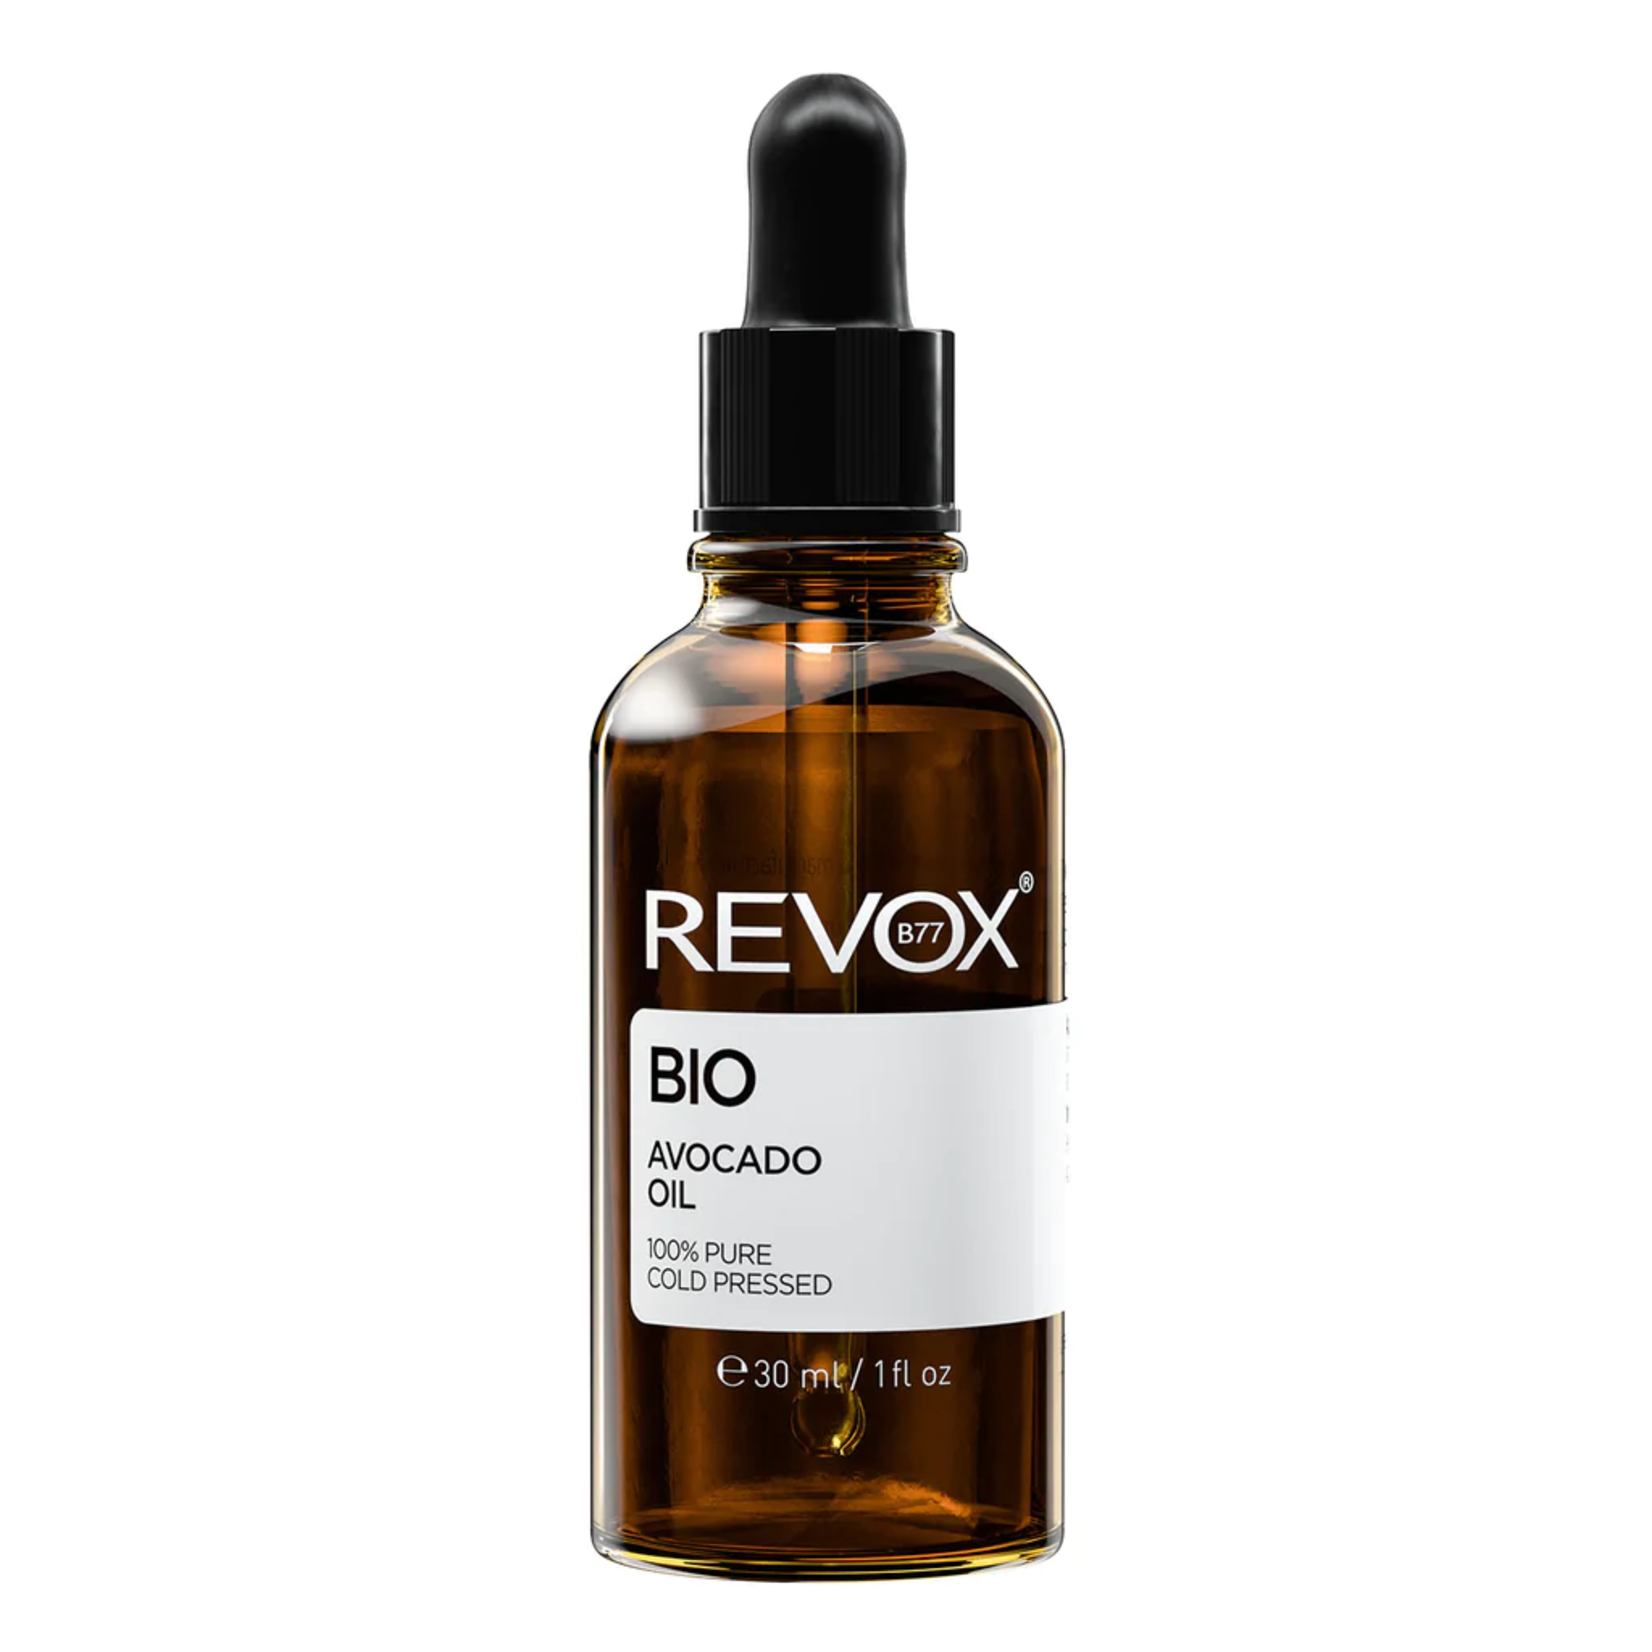 Revox Suero Revox BIO Aceite de aguacate 30 ml